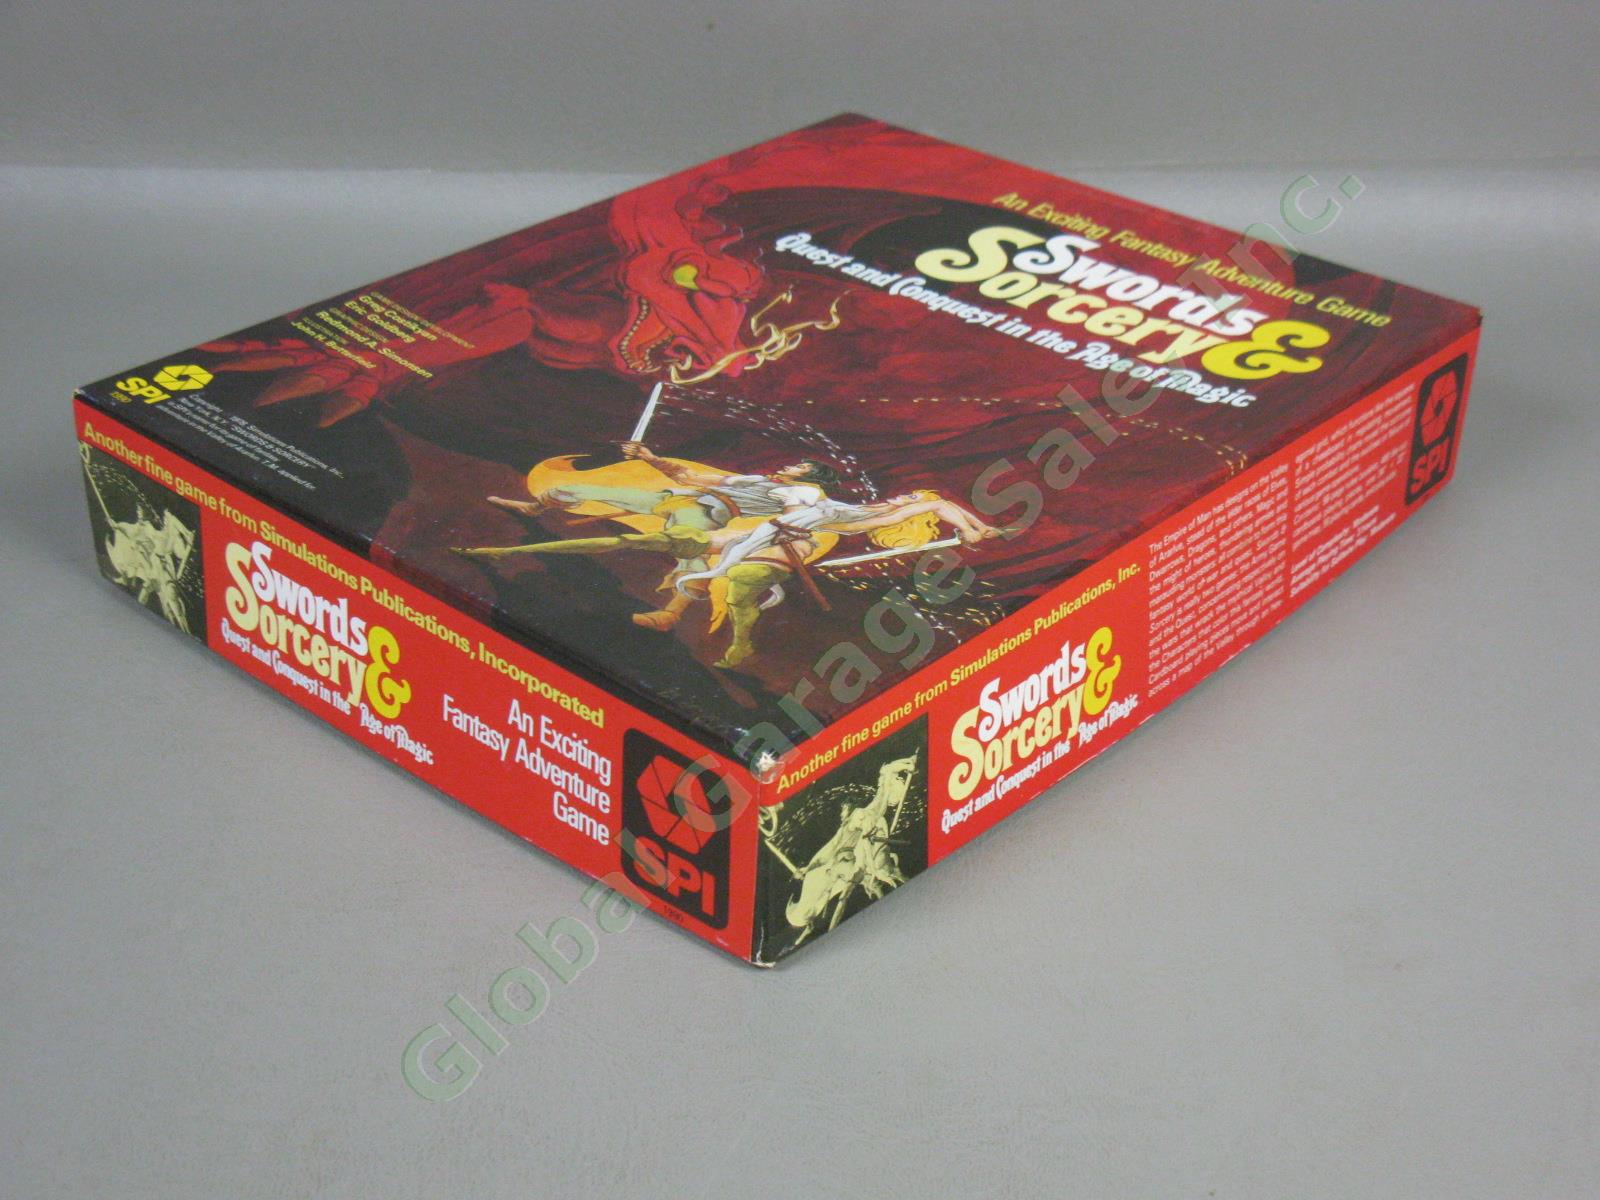 Vtg 1978 SPI Swords & Sorcery Quest + Conquest Magic Fantasy Game Unpunched! NR! 8